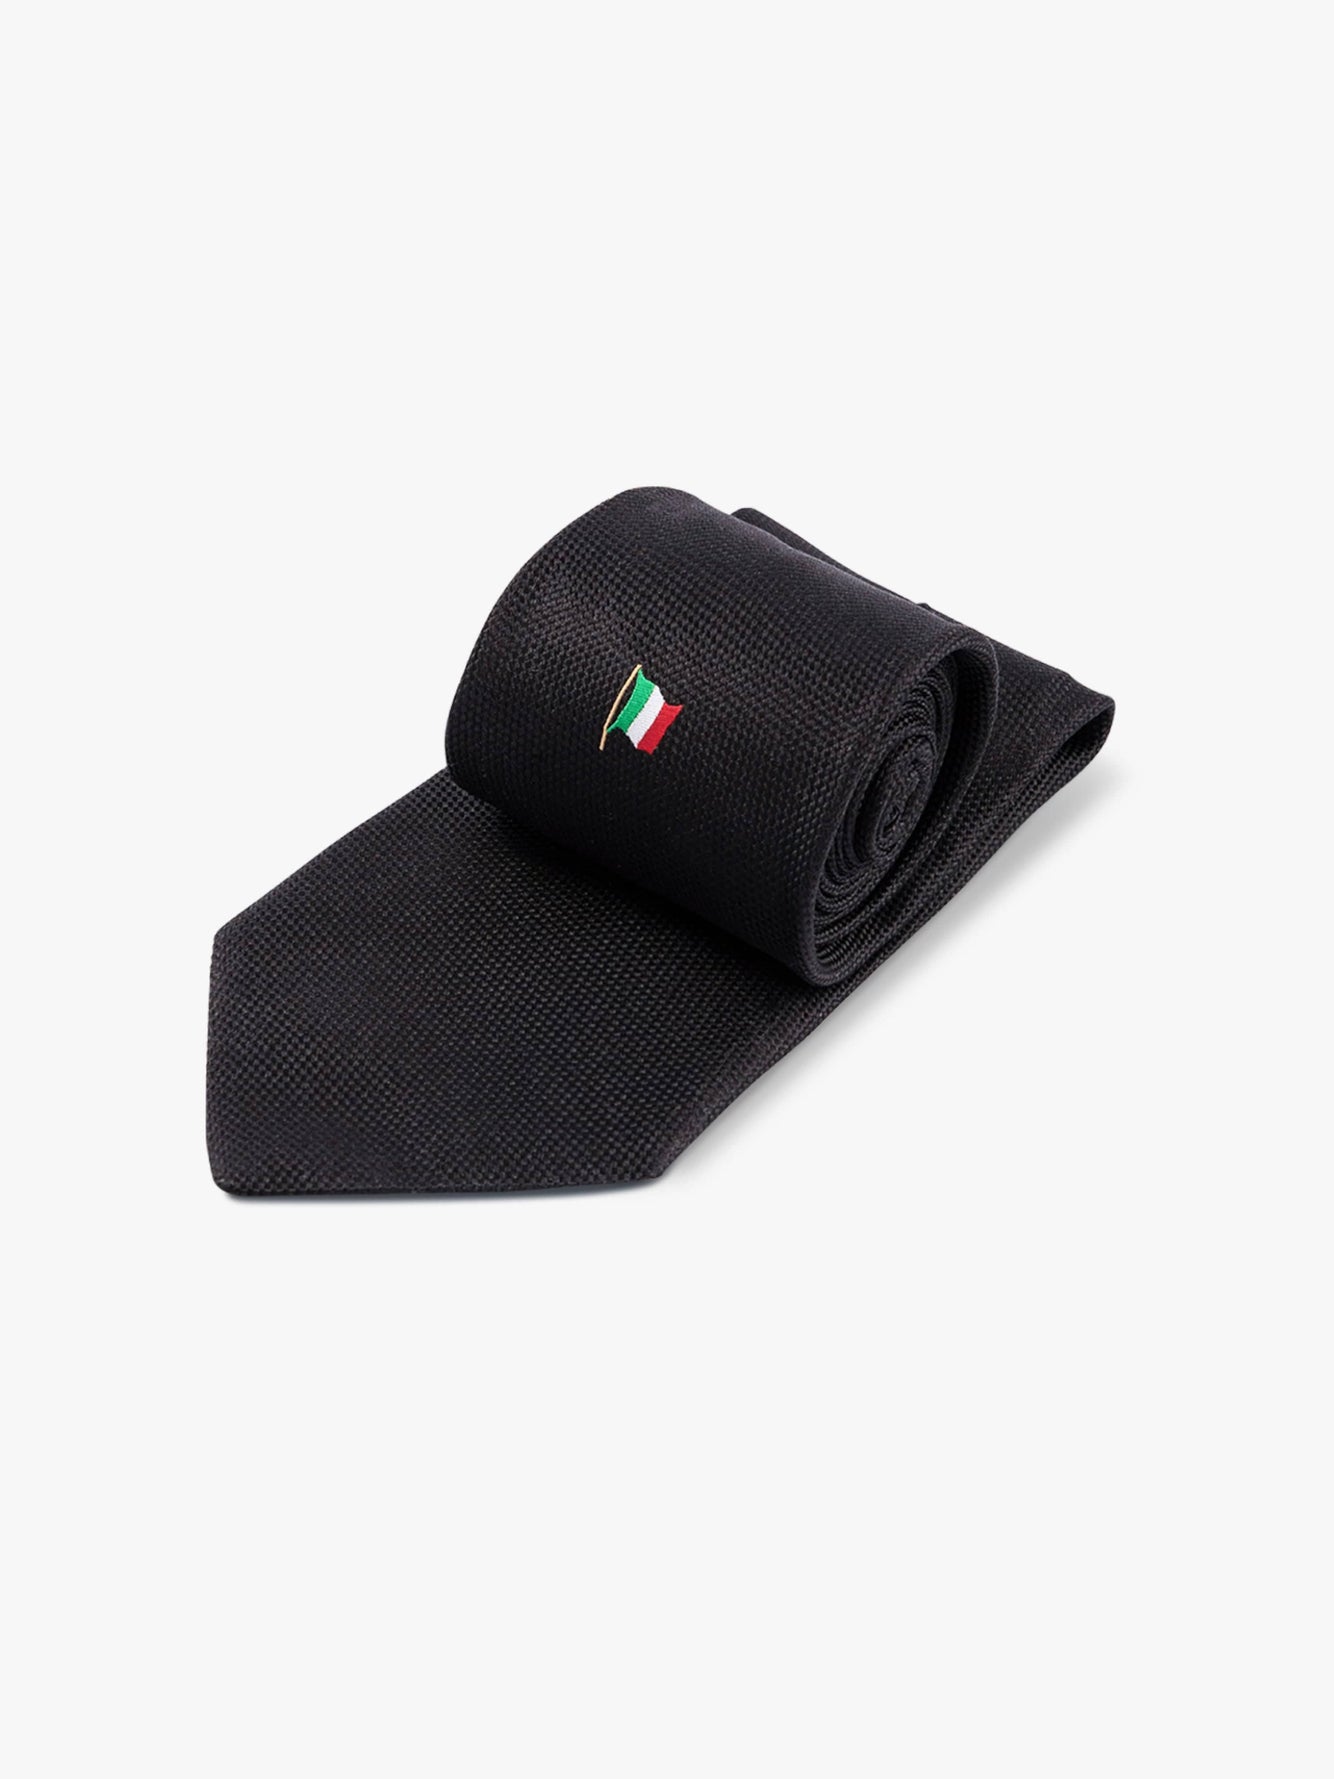 Black Italian Flag Tie - Grand Le Mar